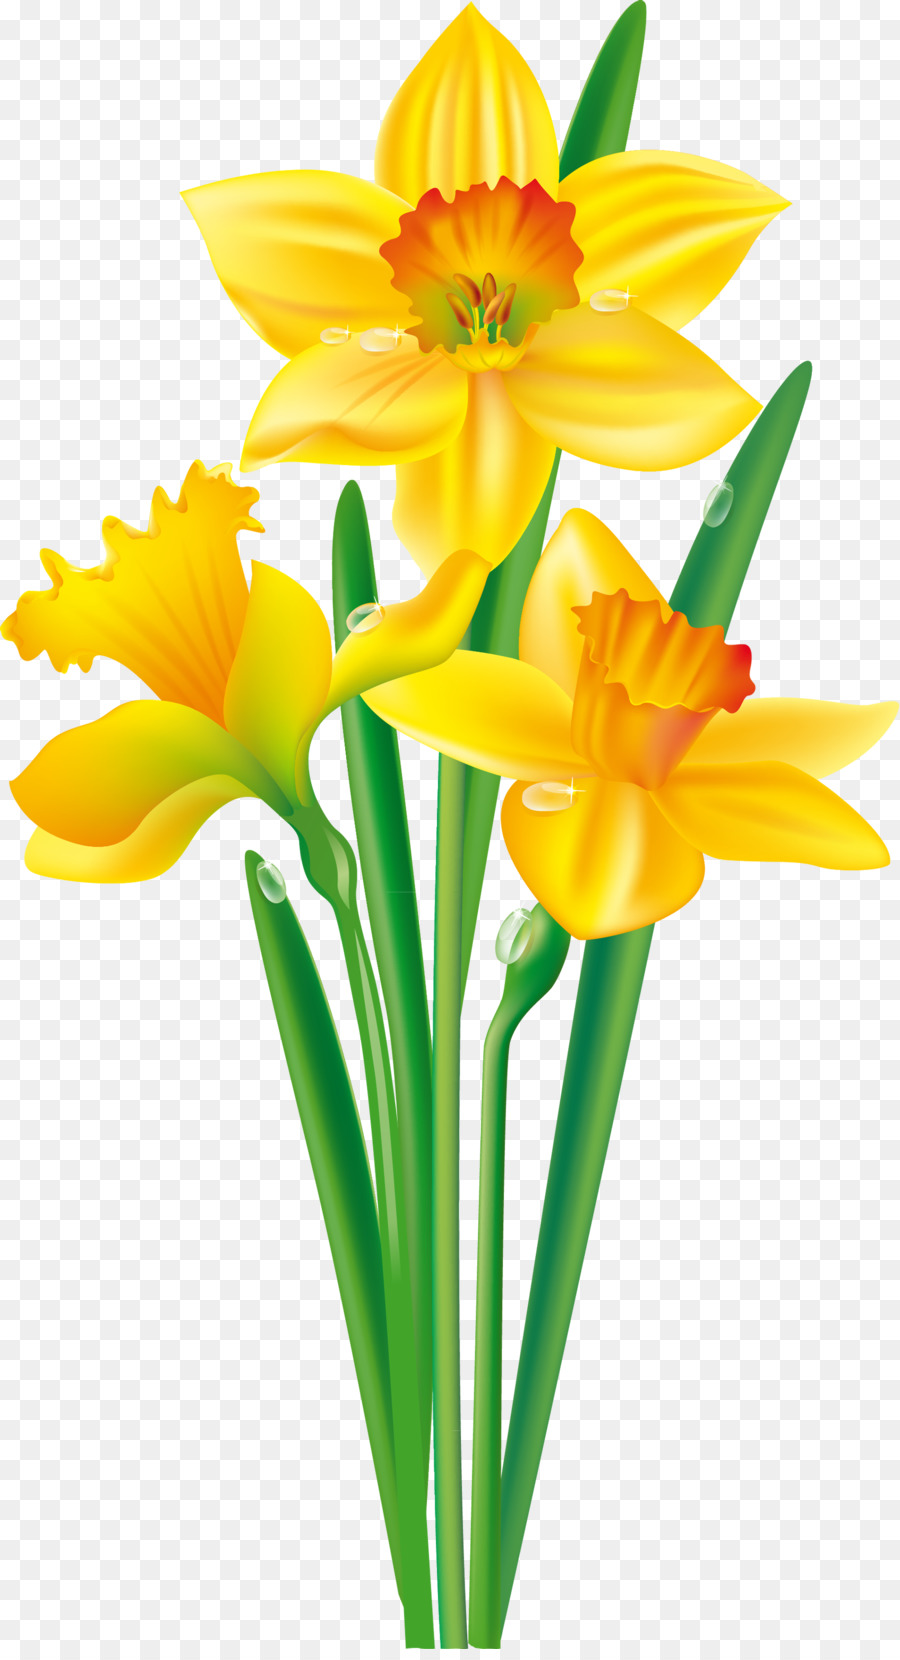 Flower Daffodil Bulb Clip art - daffodil png download - 1695*3106 - Free Transparent Flower png Download.